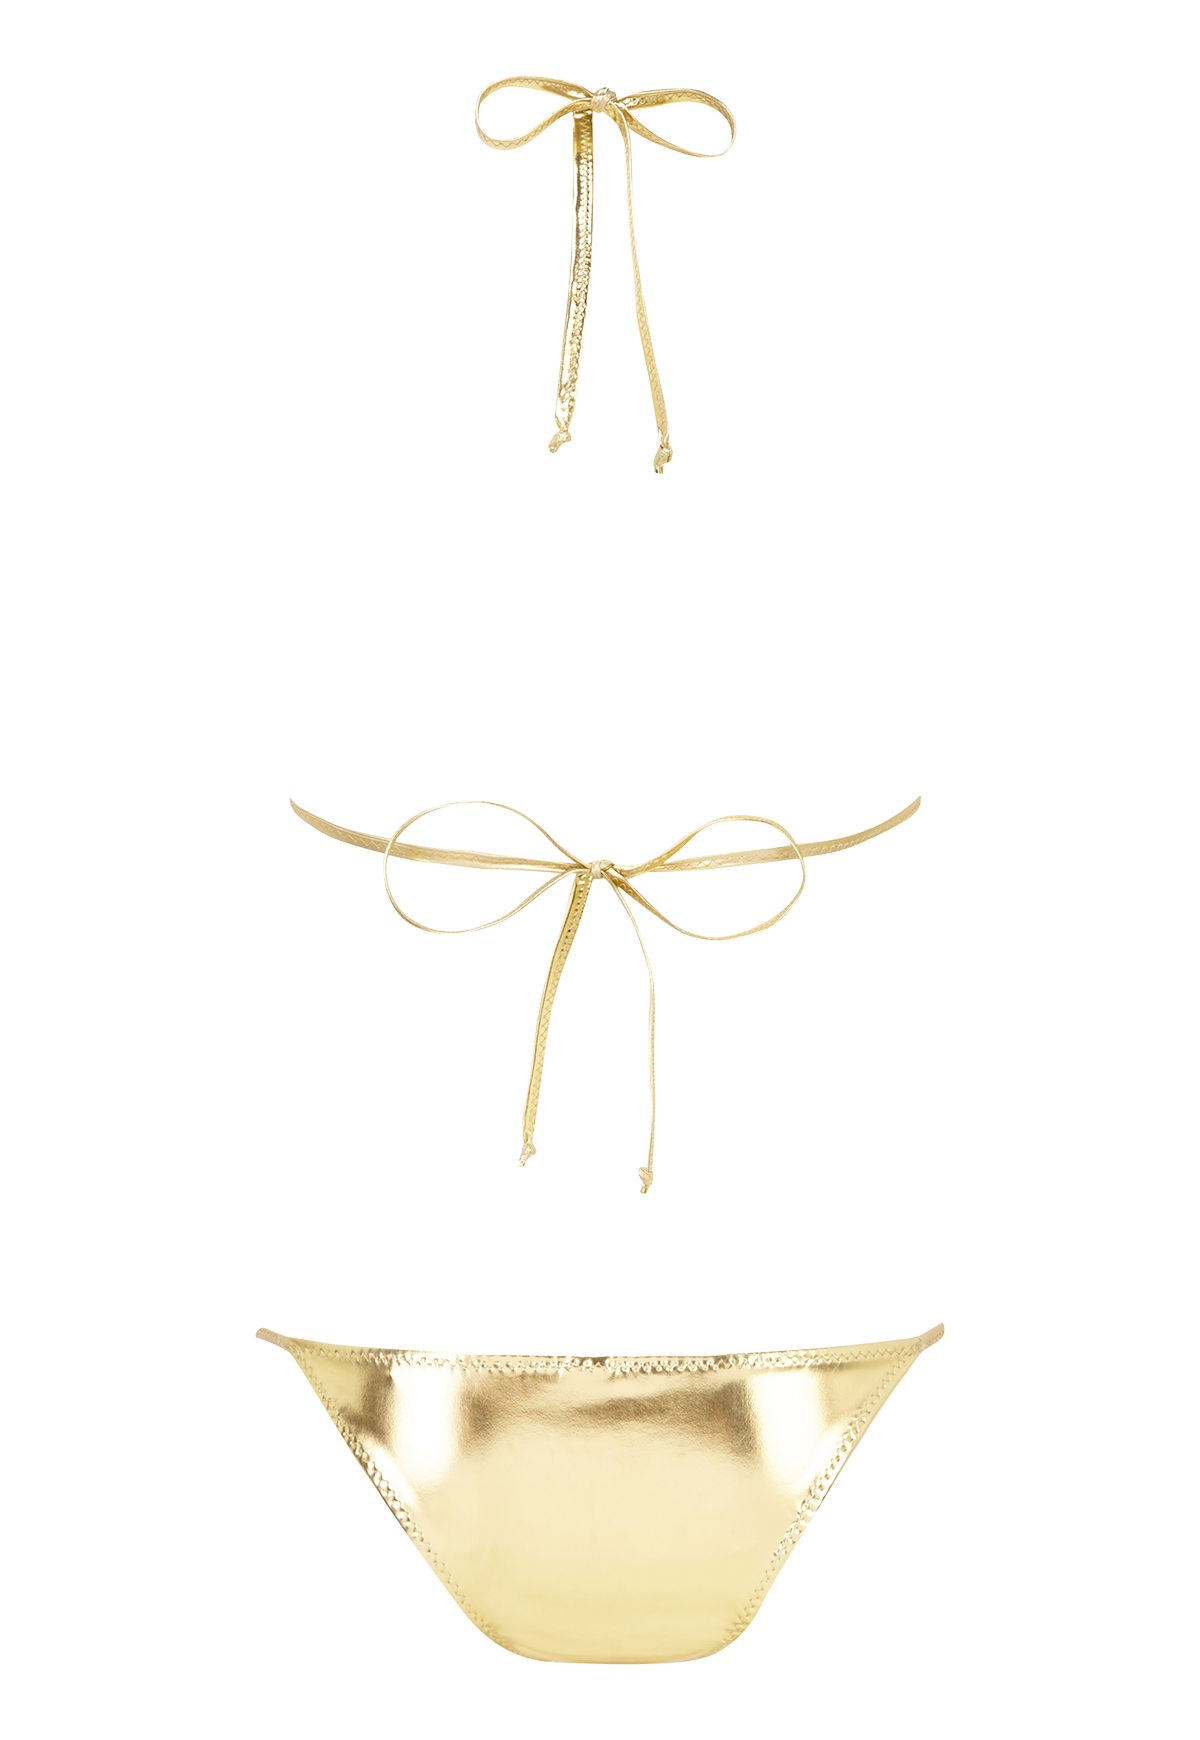 THE PAMELA BIKINI in SOFT GOLD PVC